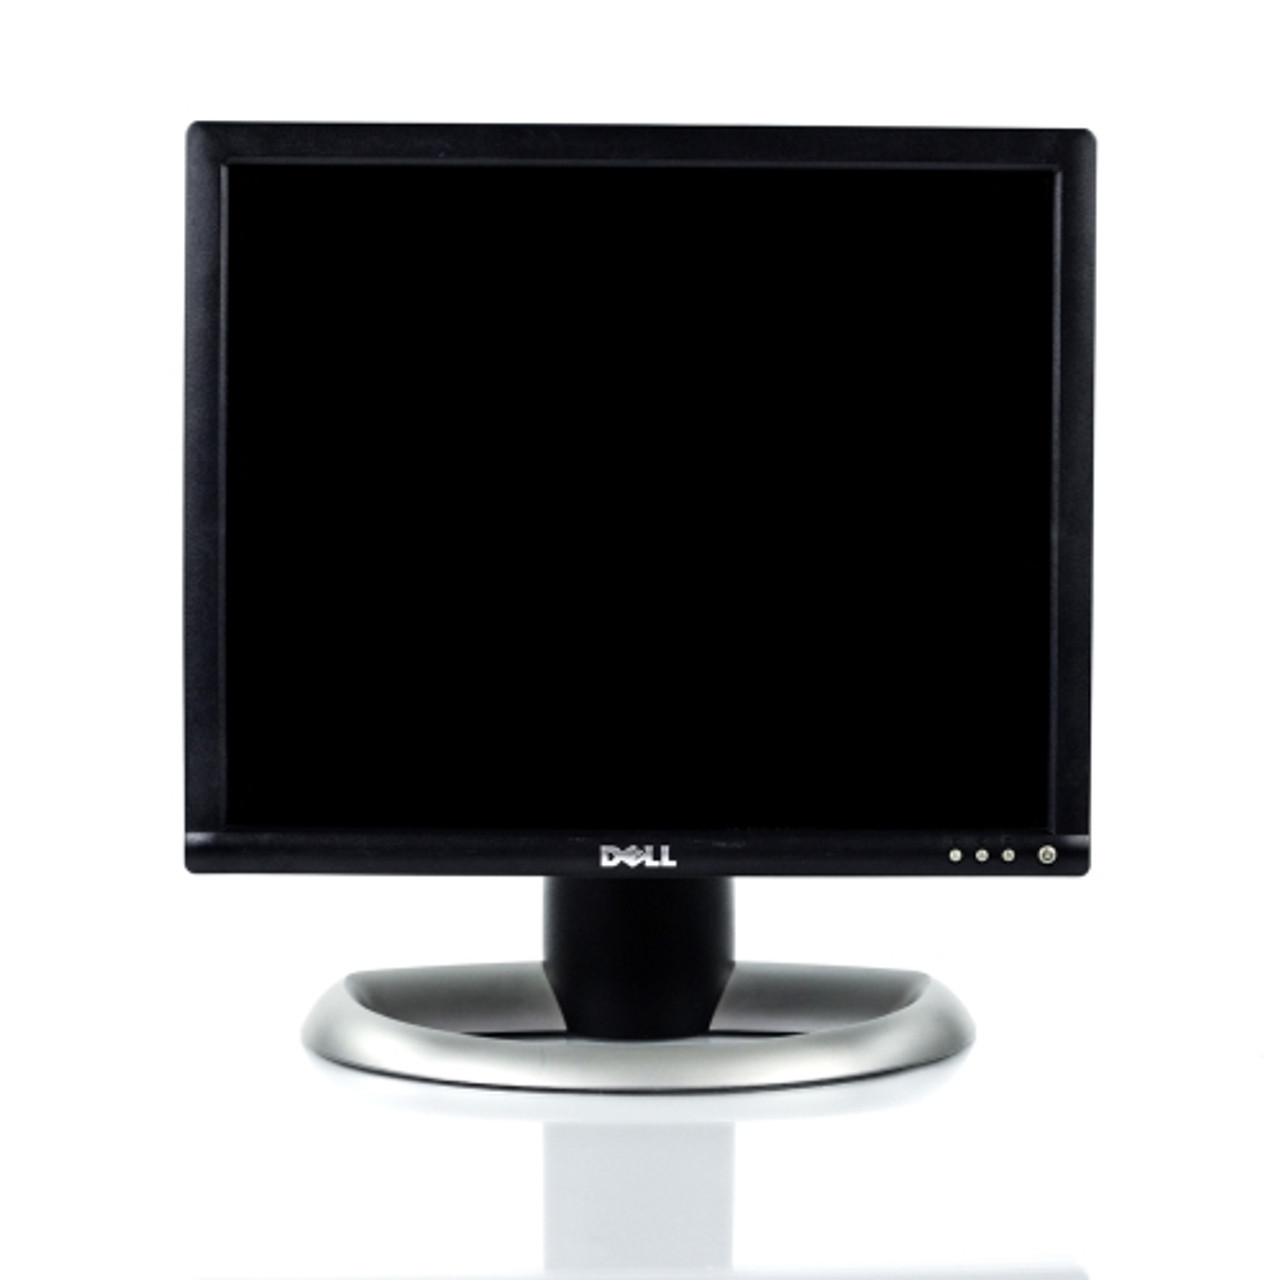 Ecran PC Pro 17 Terra 1700PV WM1700 VGA DVI-D 5:4 TFT TN LCD 1280x1024 -  MonsieurCyberMan